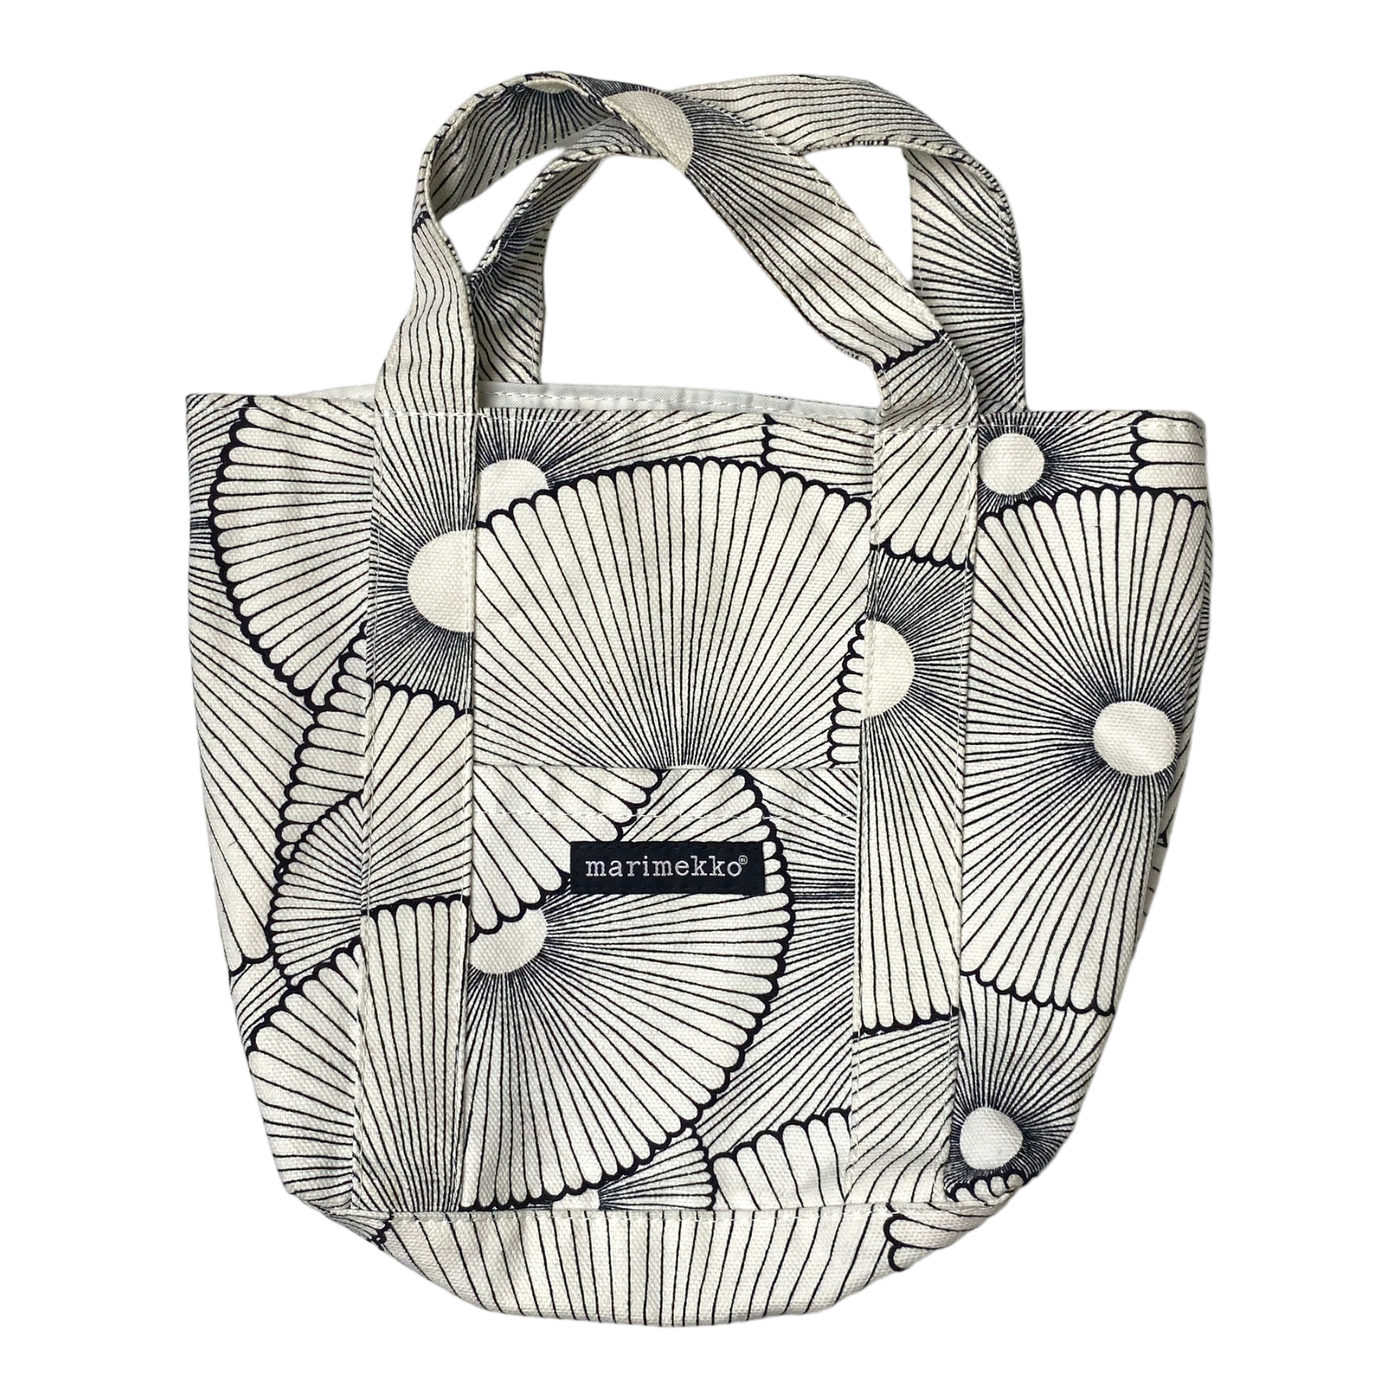 Marimekko canvas tote bag, black/white